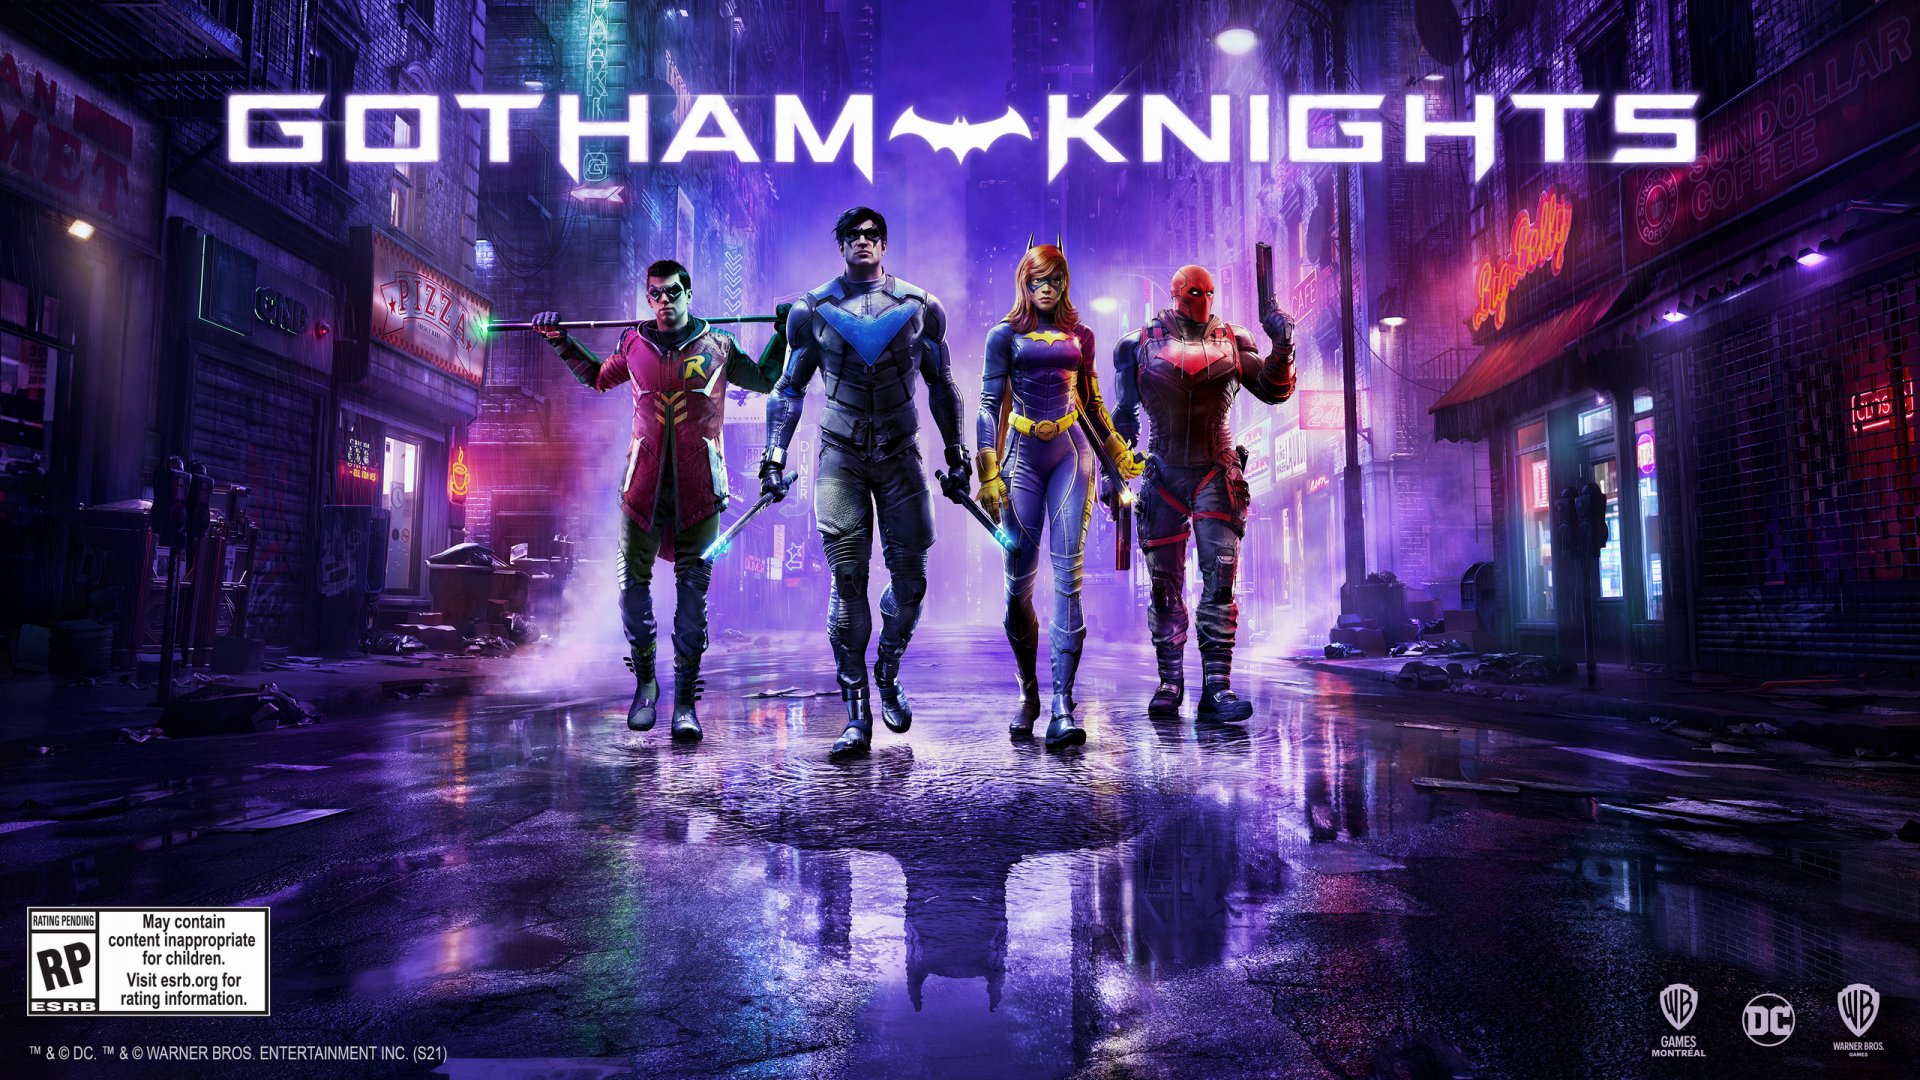 Gotham Knights Key Art 16x9-3628316131226995cff0.41809317